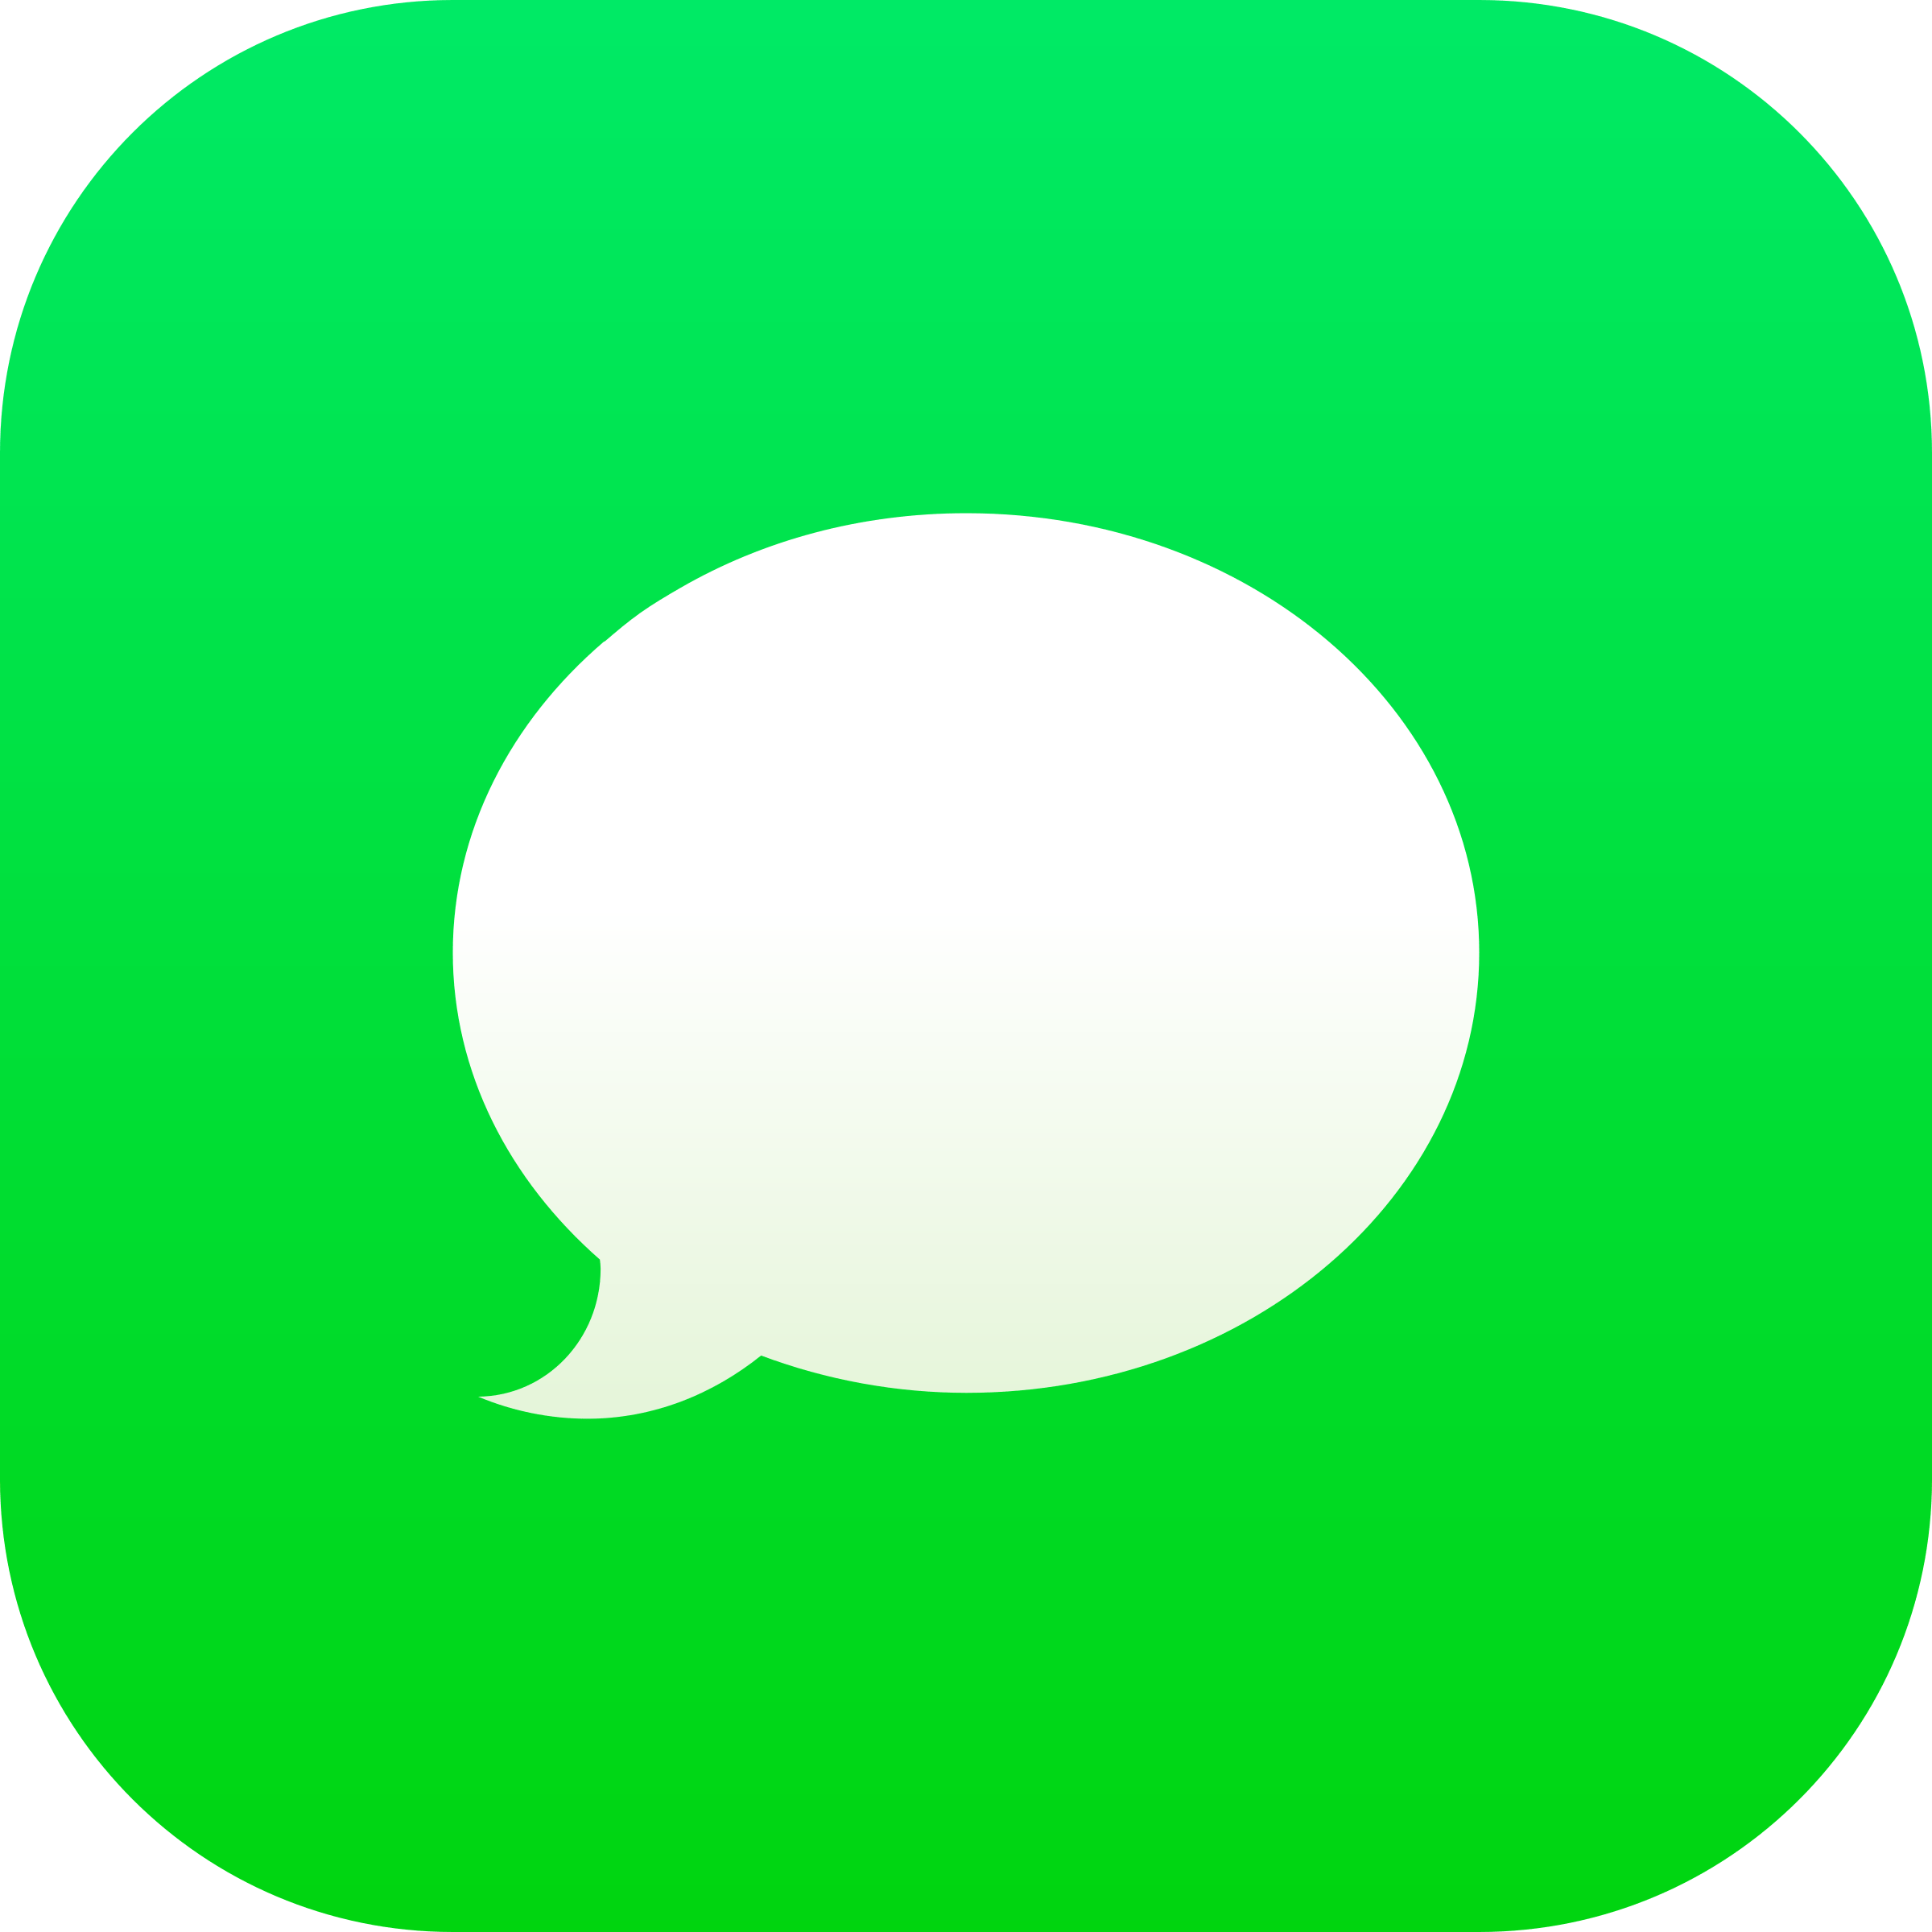 Green Messaging Logo - Messages iOS Logo PNG Transparent & SVG Vector - Freebie Supply